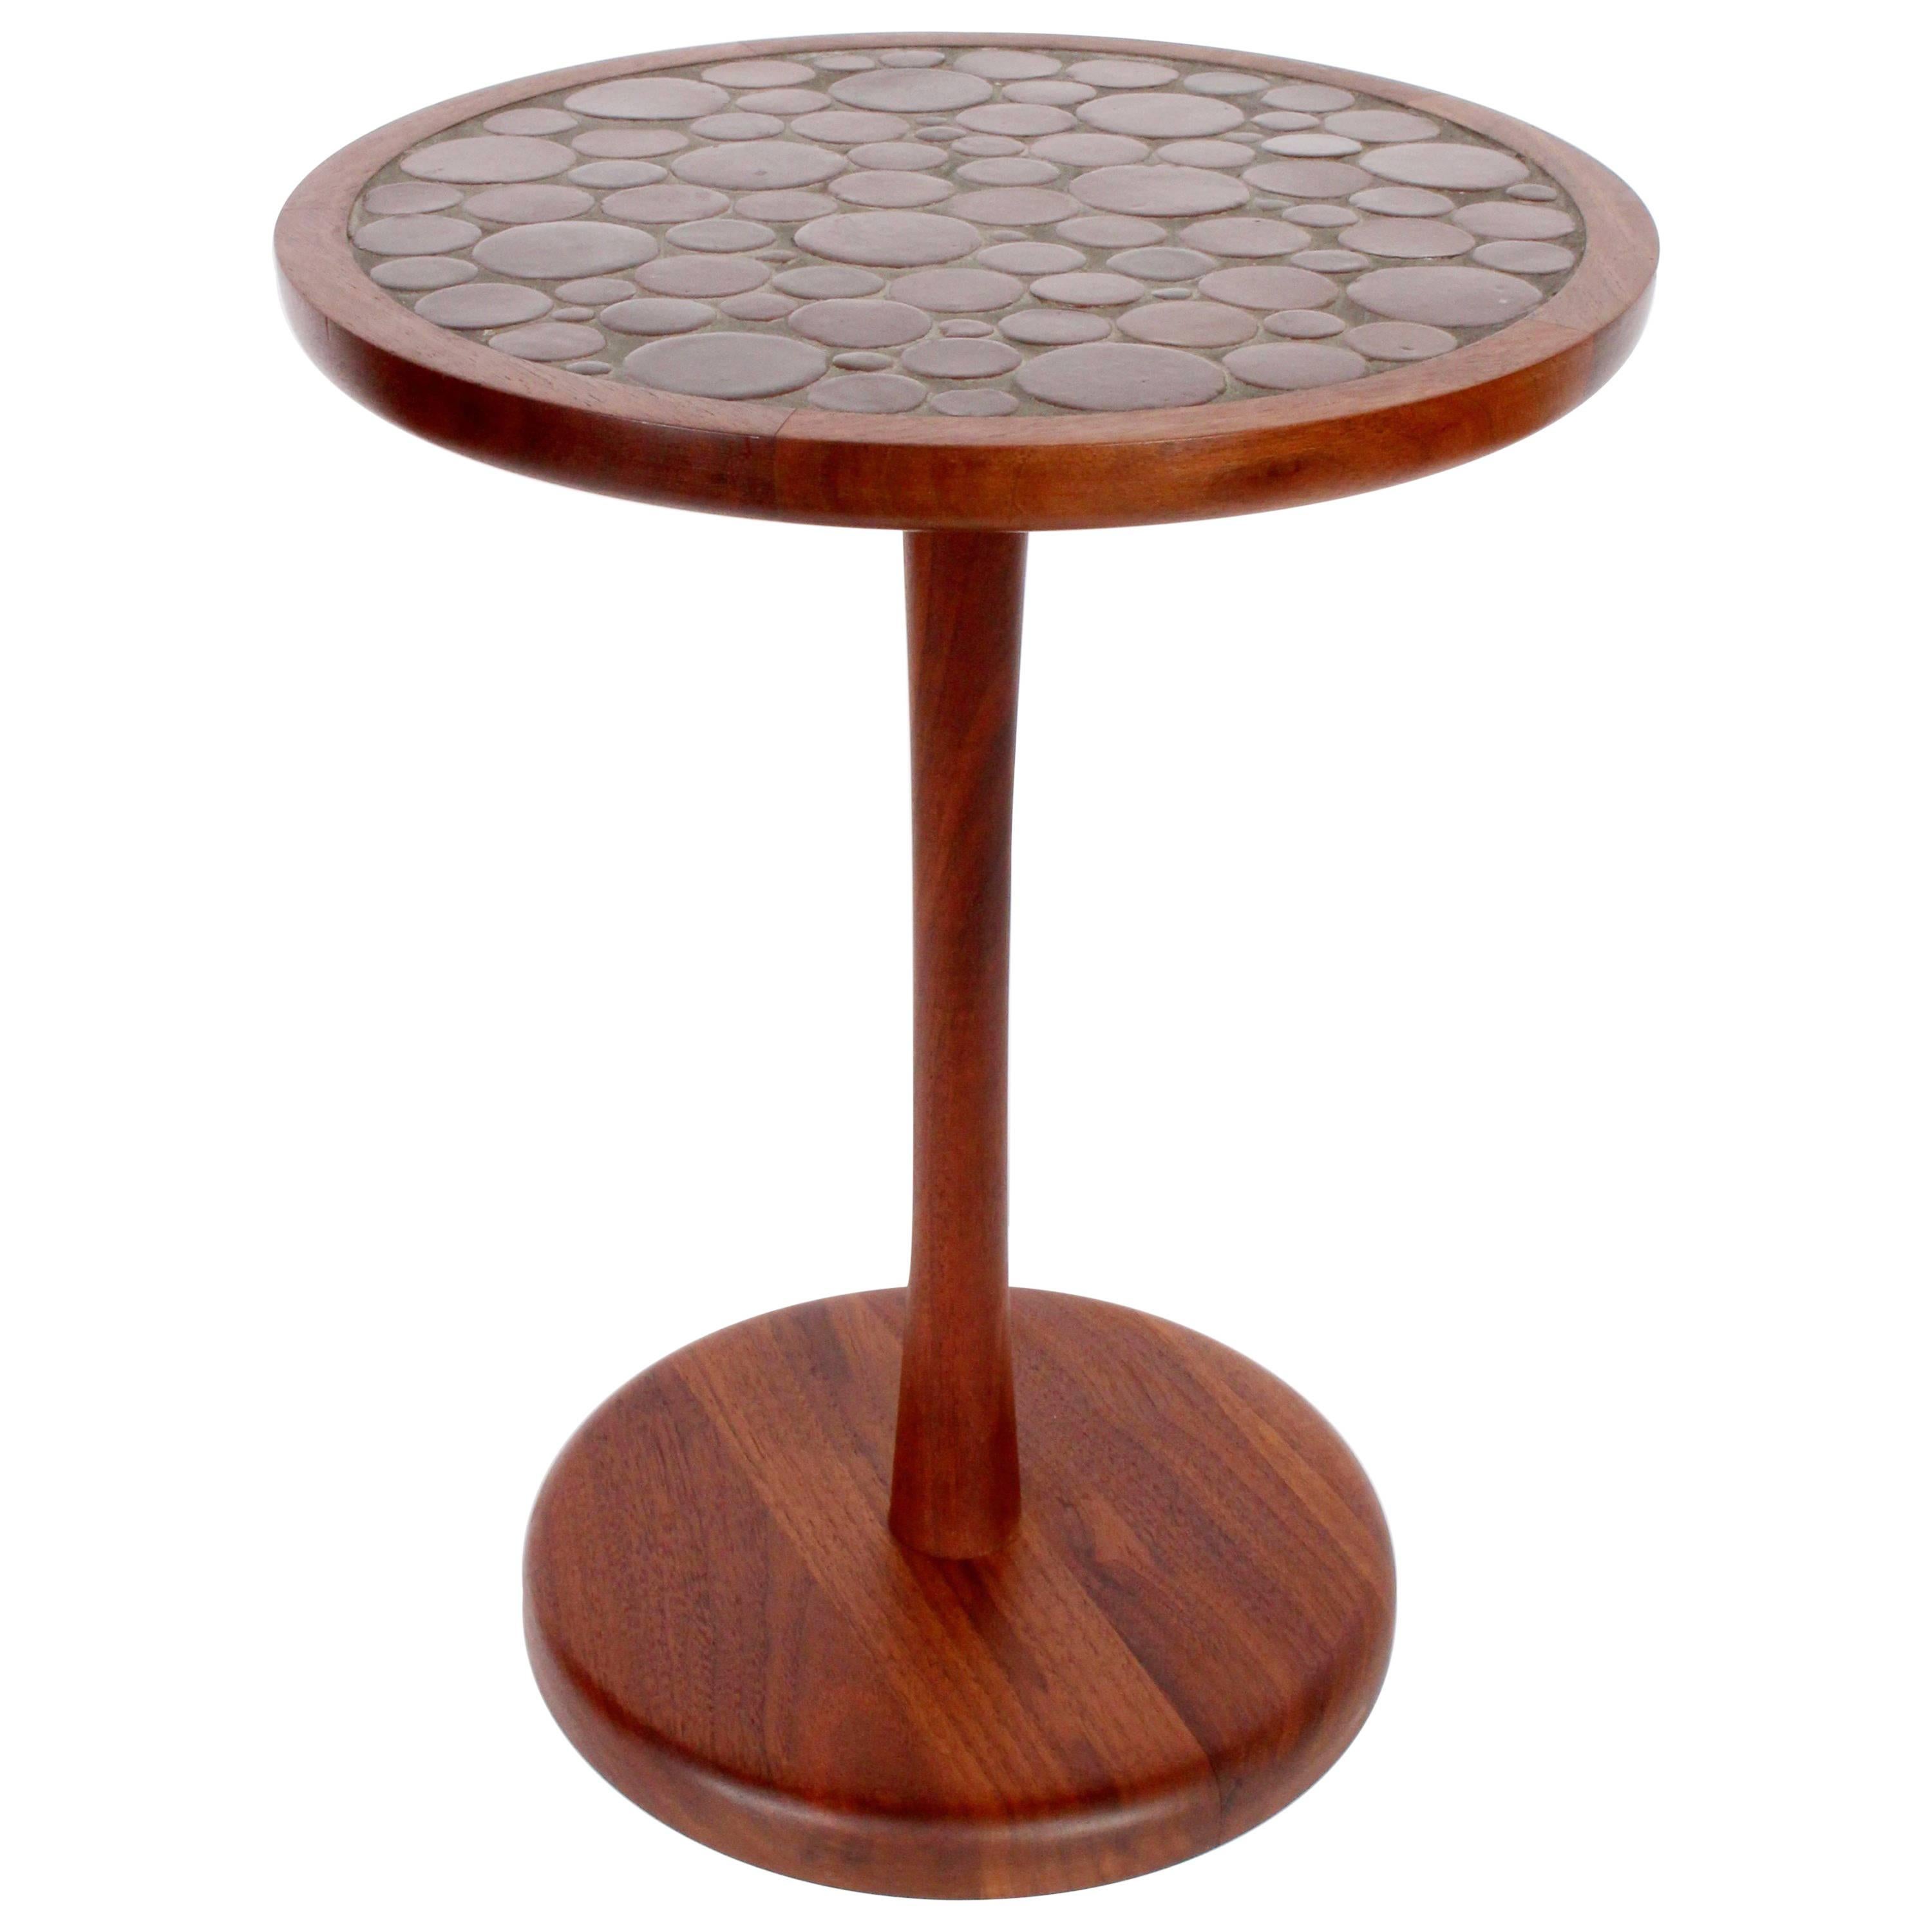 Gordon Martz Marshall Studios Dark Walnut & Dark Brown Ceramic Pedestal Table